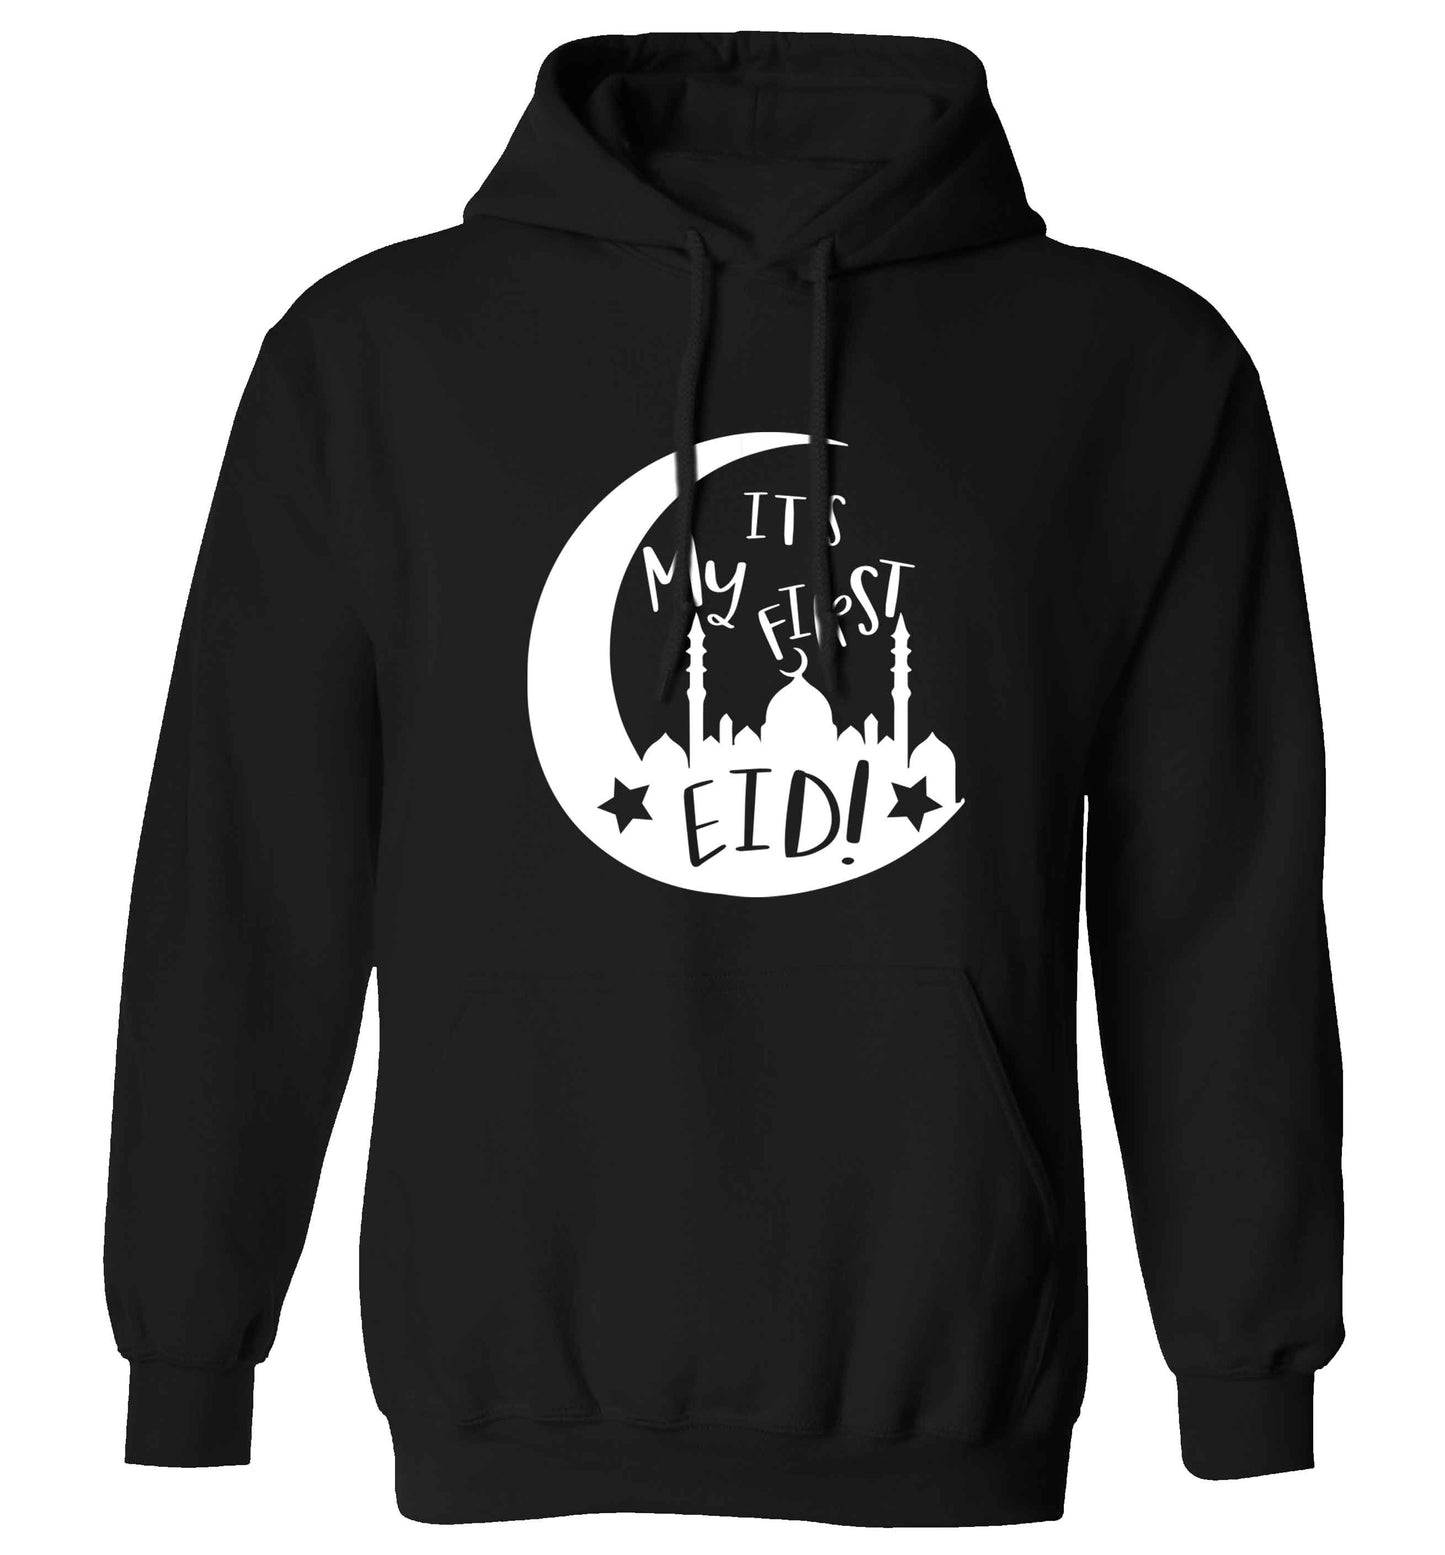 It's my first Eid moon adults unisex black hoodie 2XL